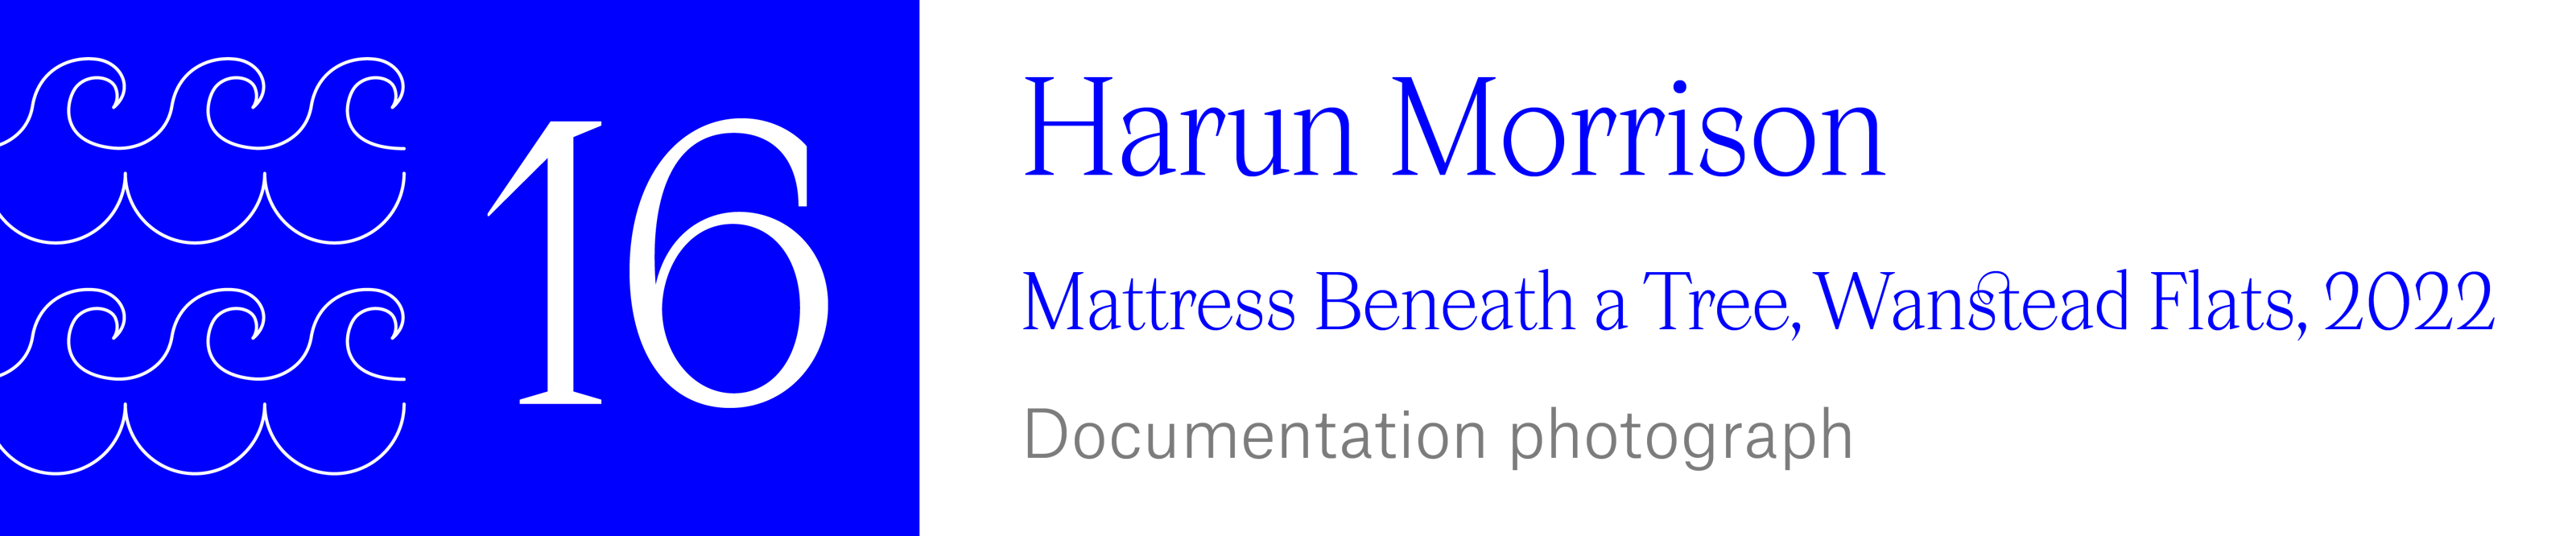 The Wave (16) Harun Morrison - Mattress Beneath a Tree, Wanstead Flats, 2022. Documentation photograph.